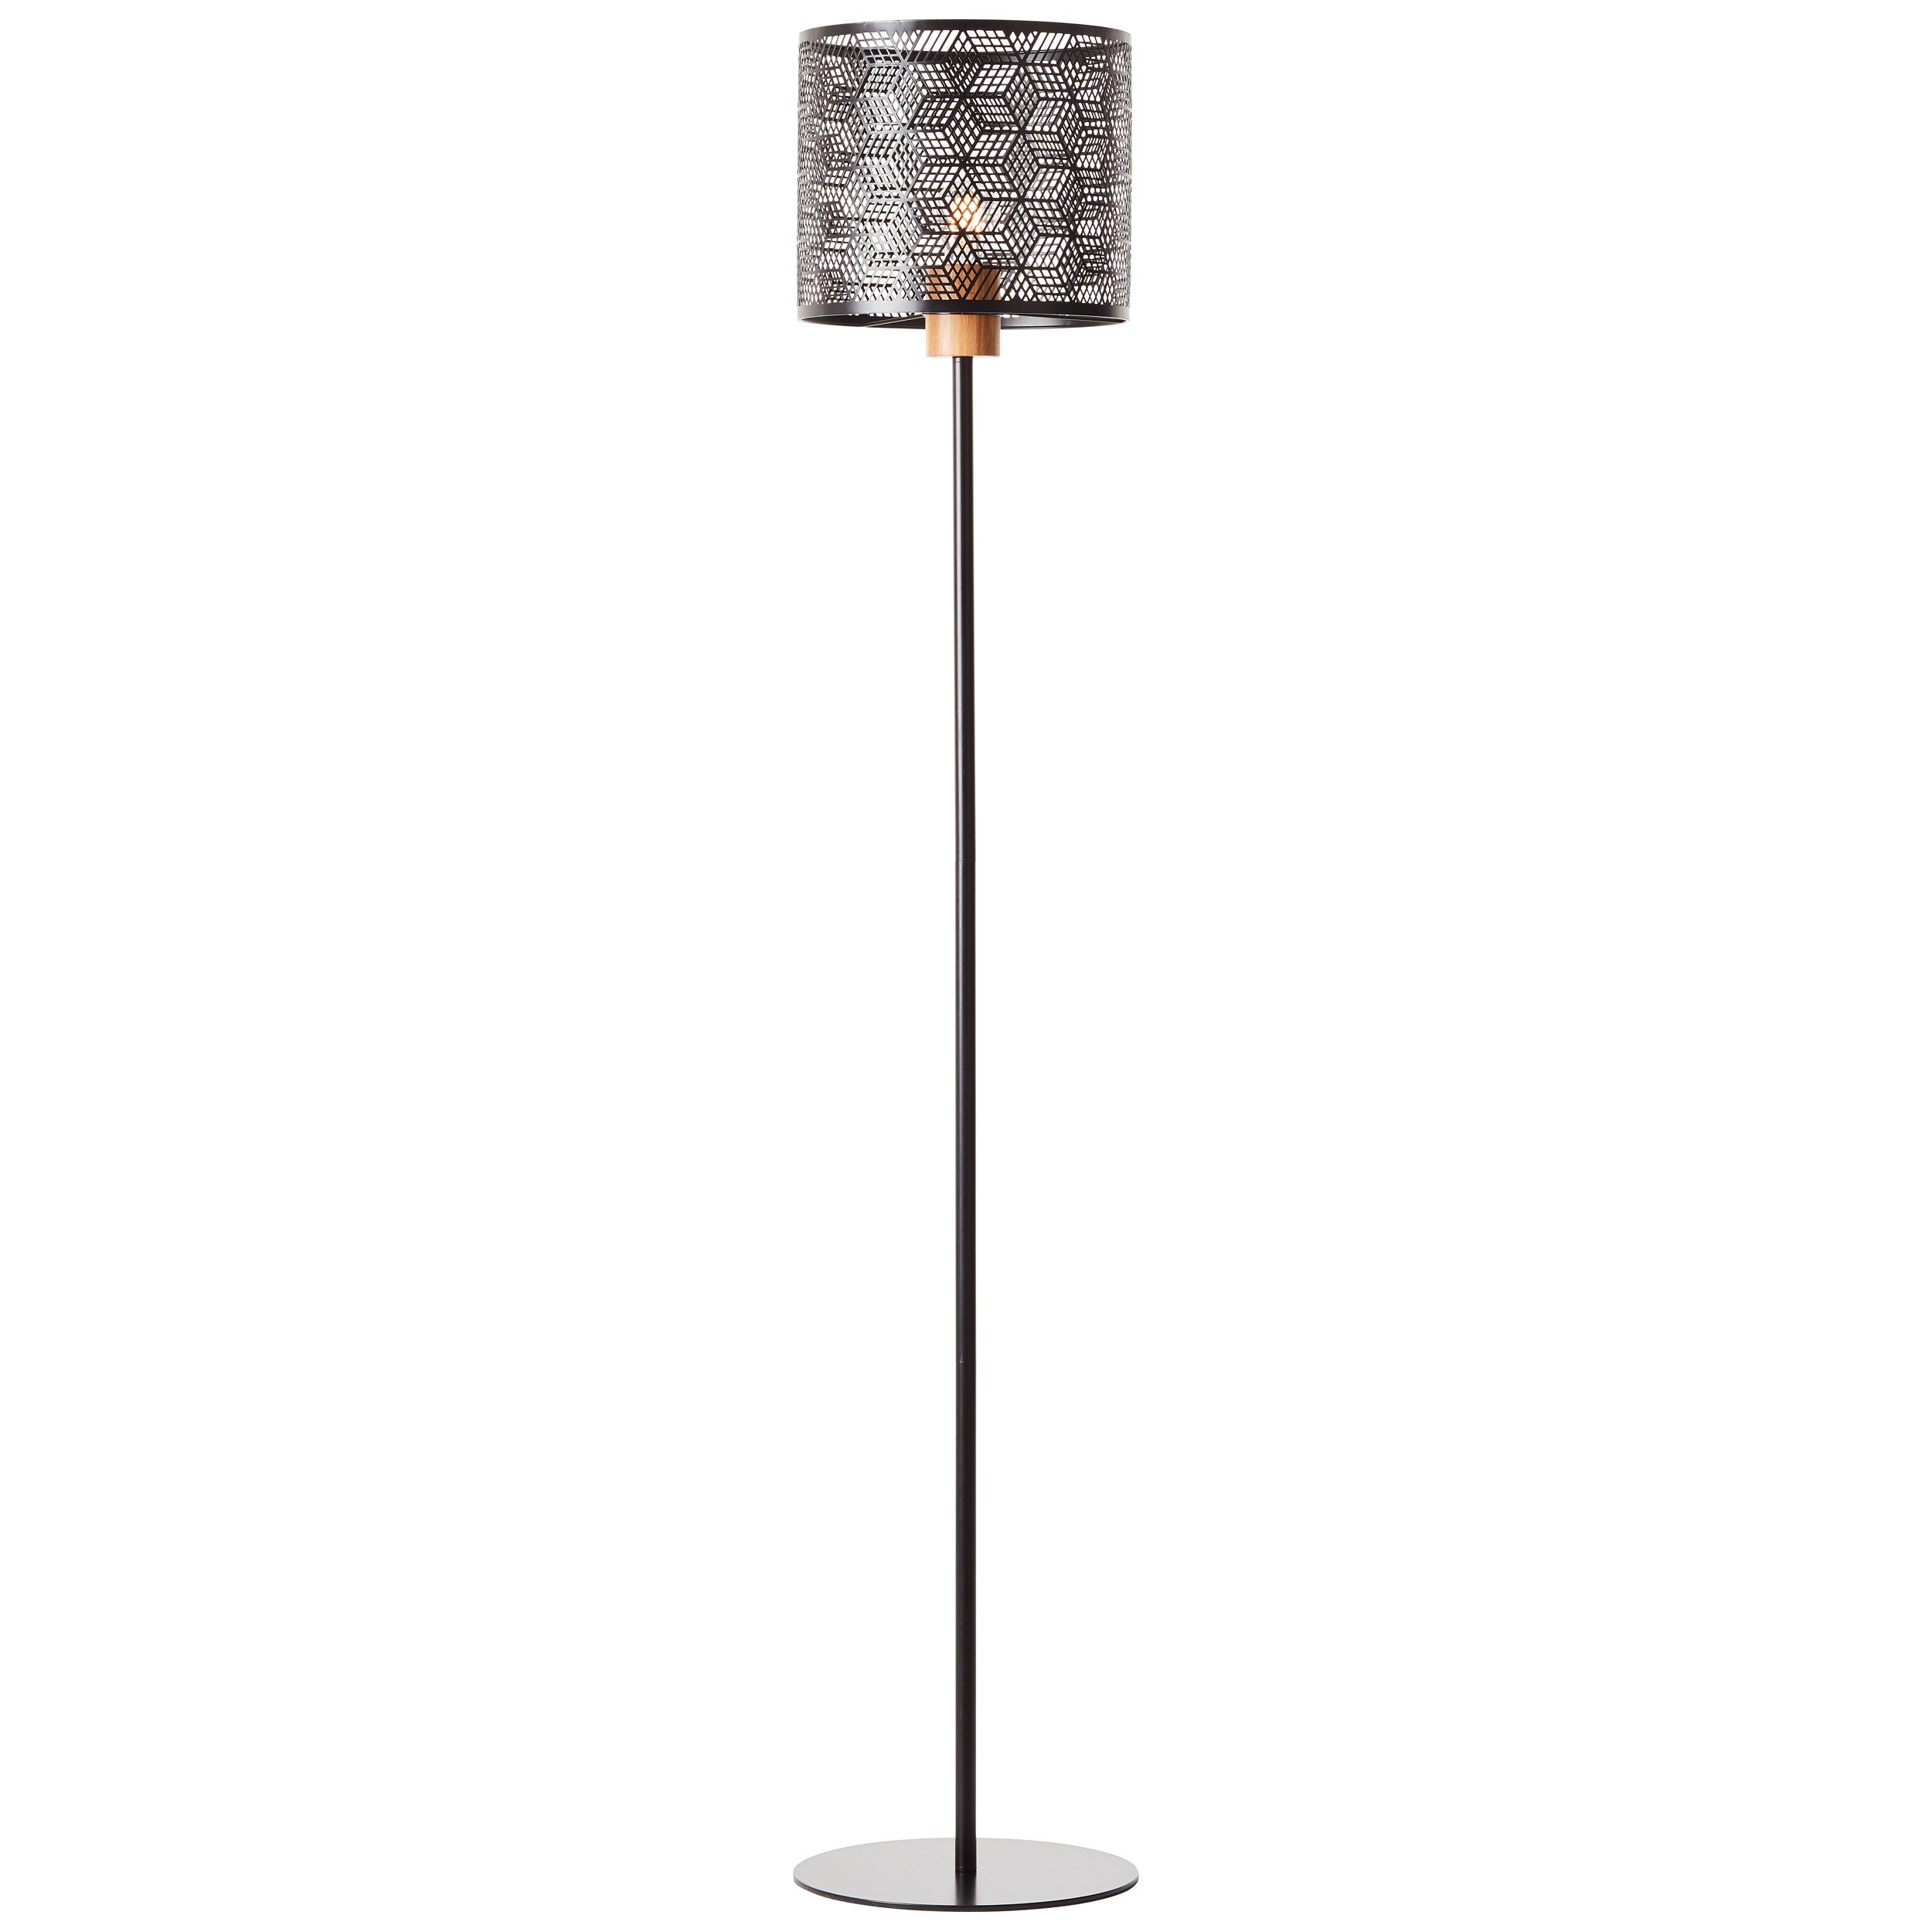 Lightbox Stehlampe, ohne Leuchtmittel, Stehlampe, 1,6 m Höhe, Ø 29 cm, E27, max. 52 W, Metall/Bambus